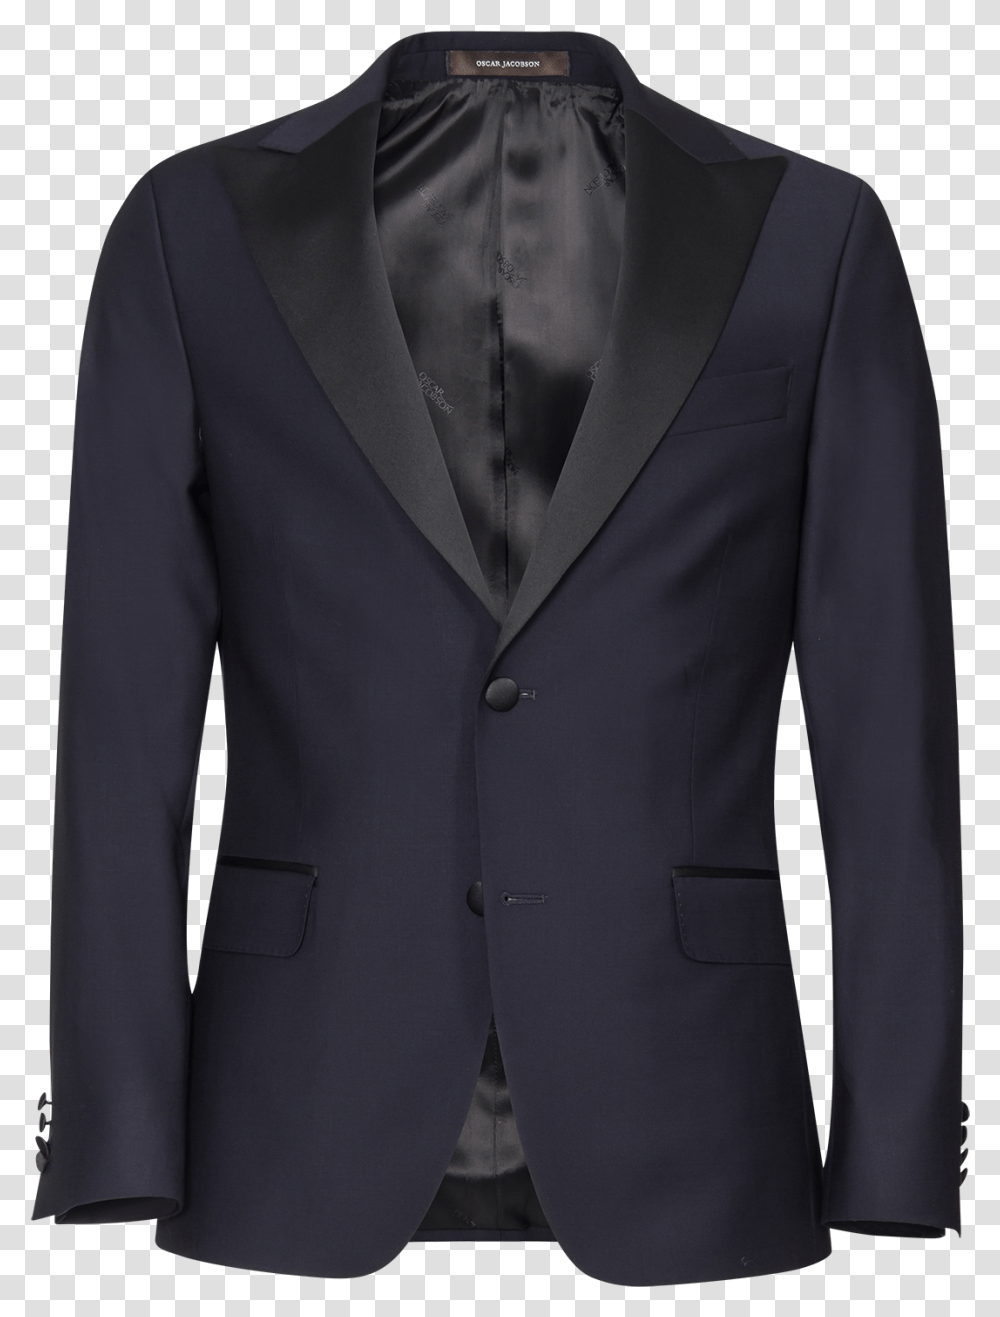 Tuxedo Background Image Portable Network Graphics, Apparel, Suit, Overcoat Transparent Png